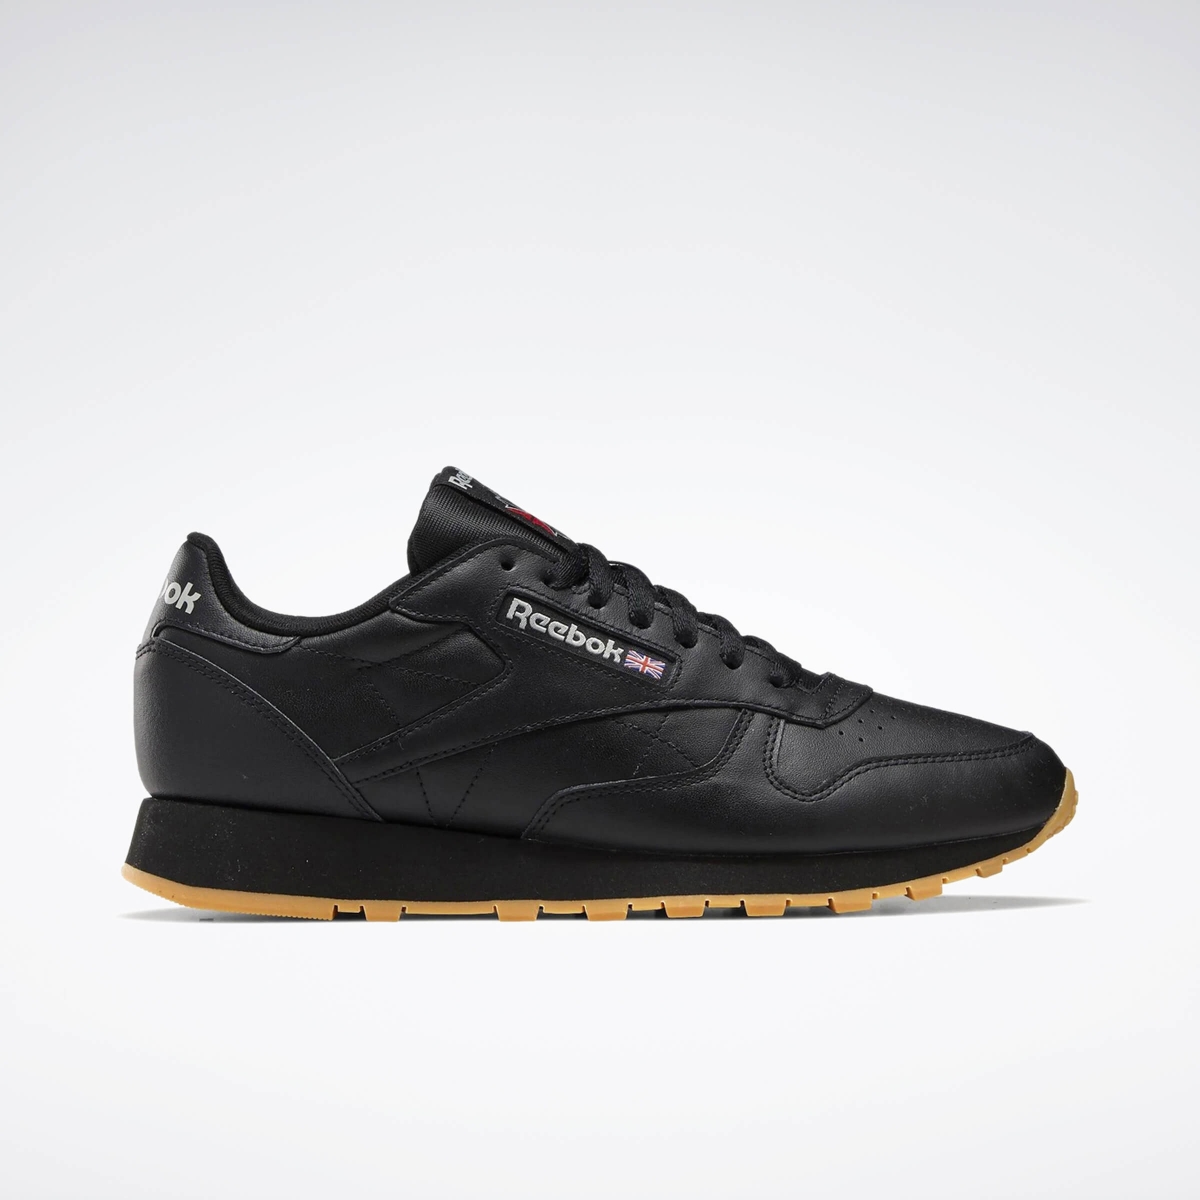 Reebok CLASSIC LEATHER Siyah Unisex Sneaker